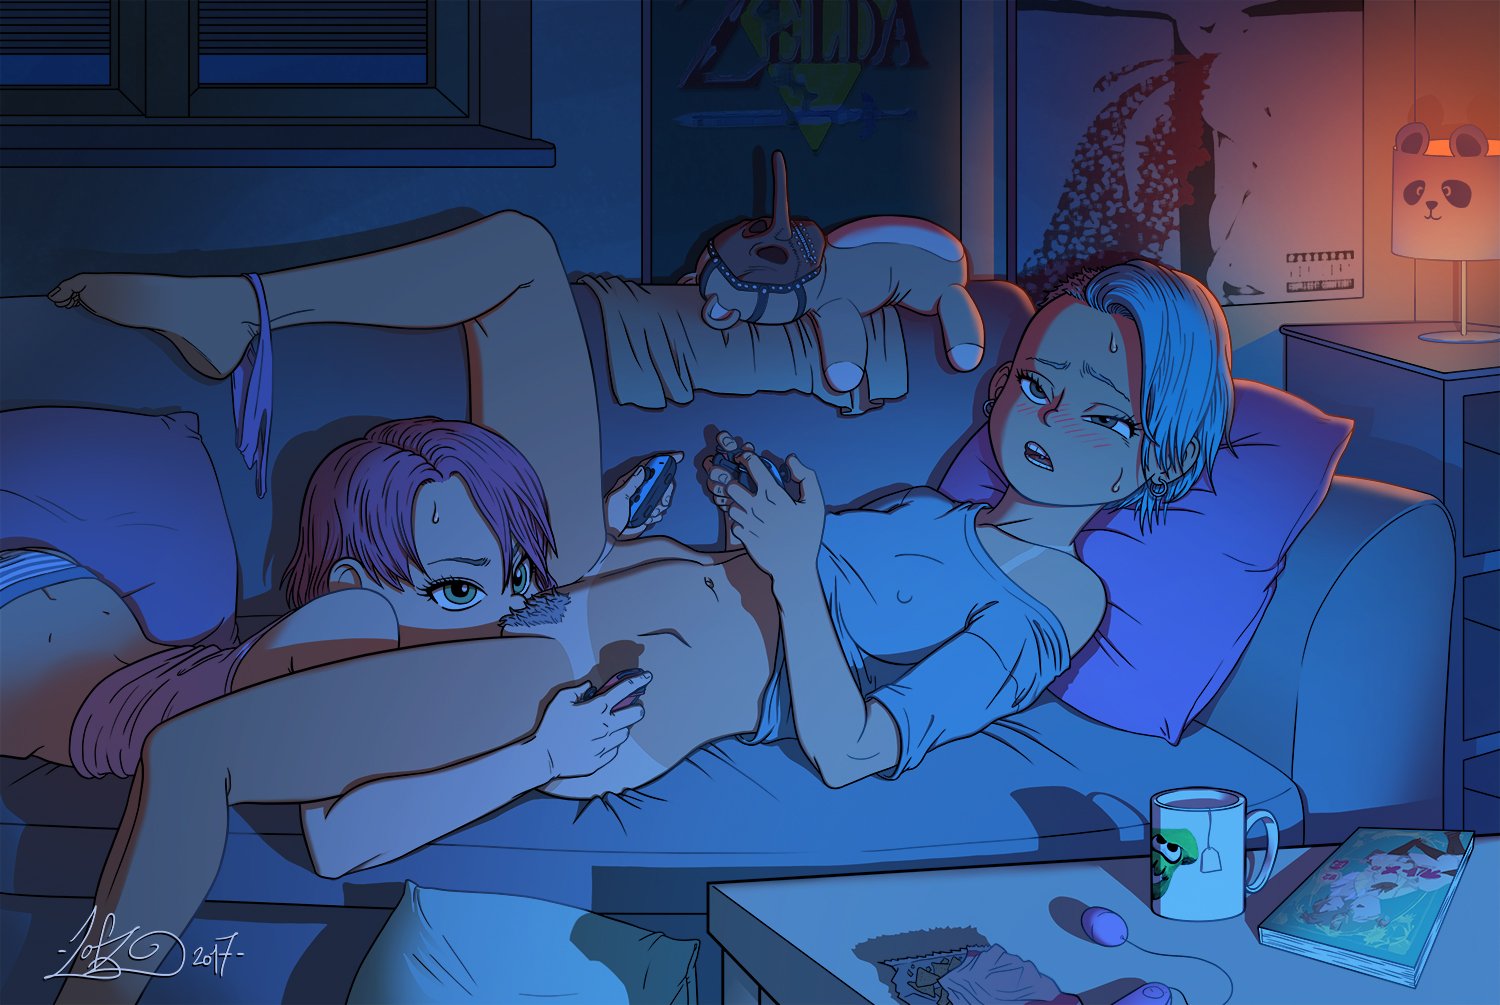 Night of the lesbian gamer chicks. (By Folo)